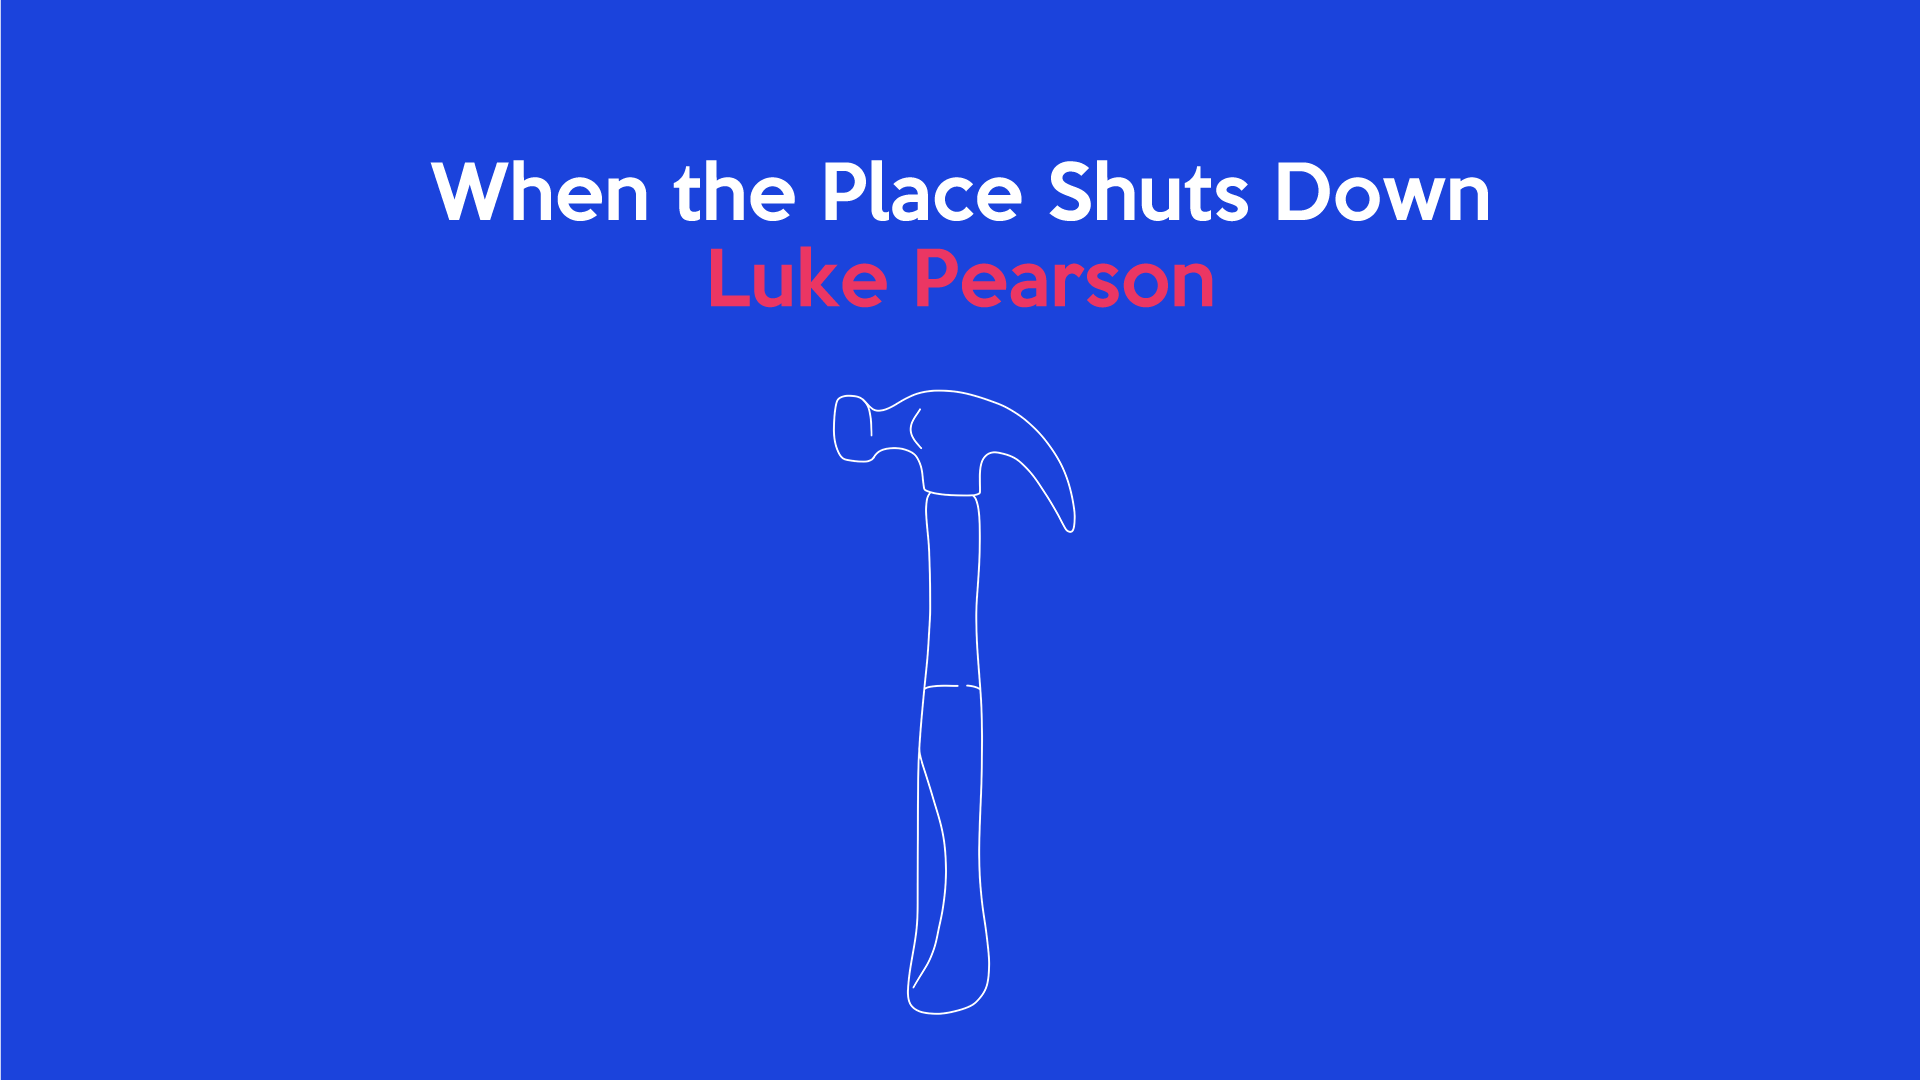 When the Place Shuts Down: Luke Pearson